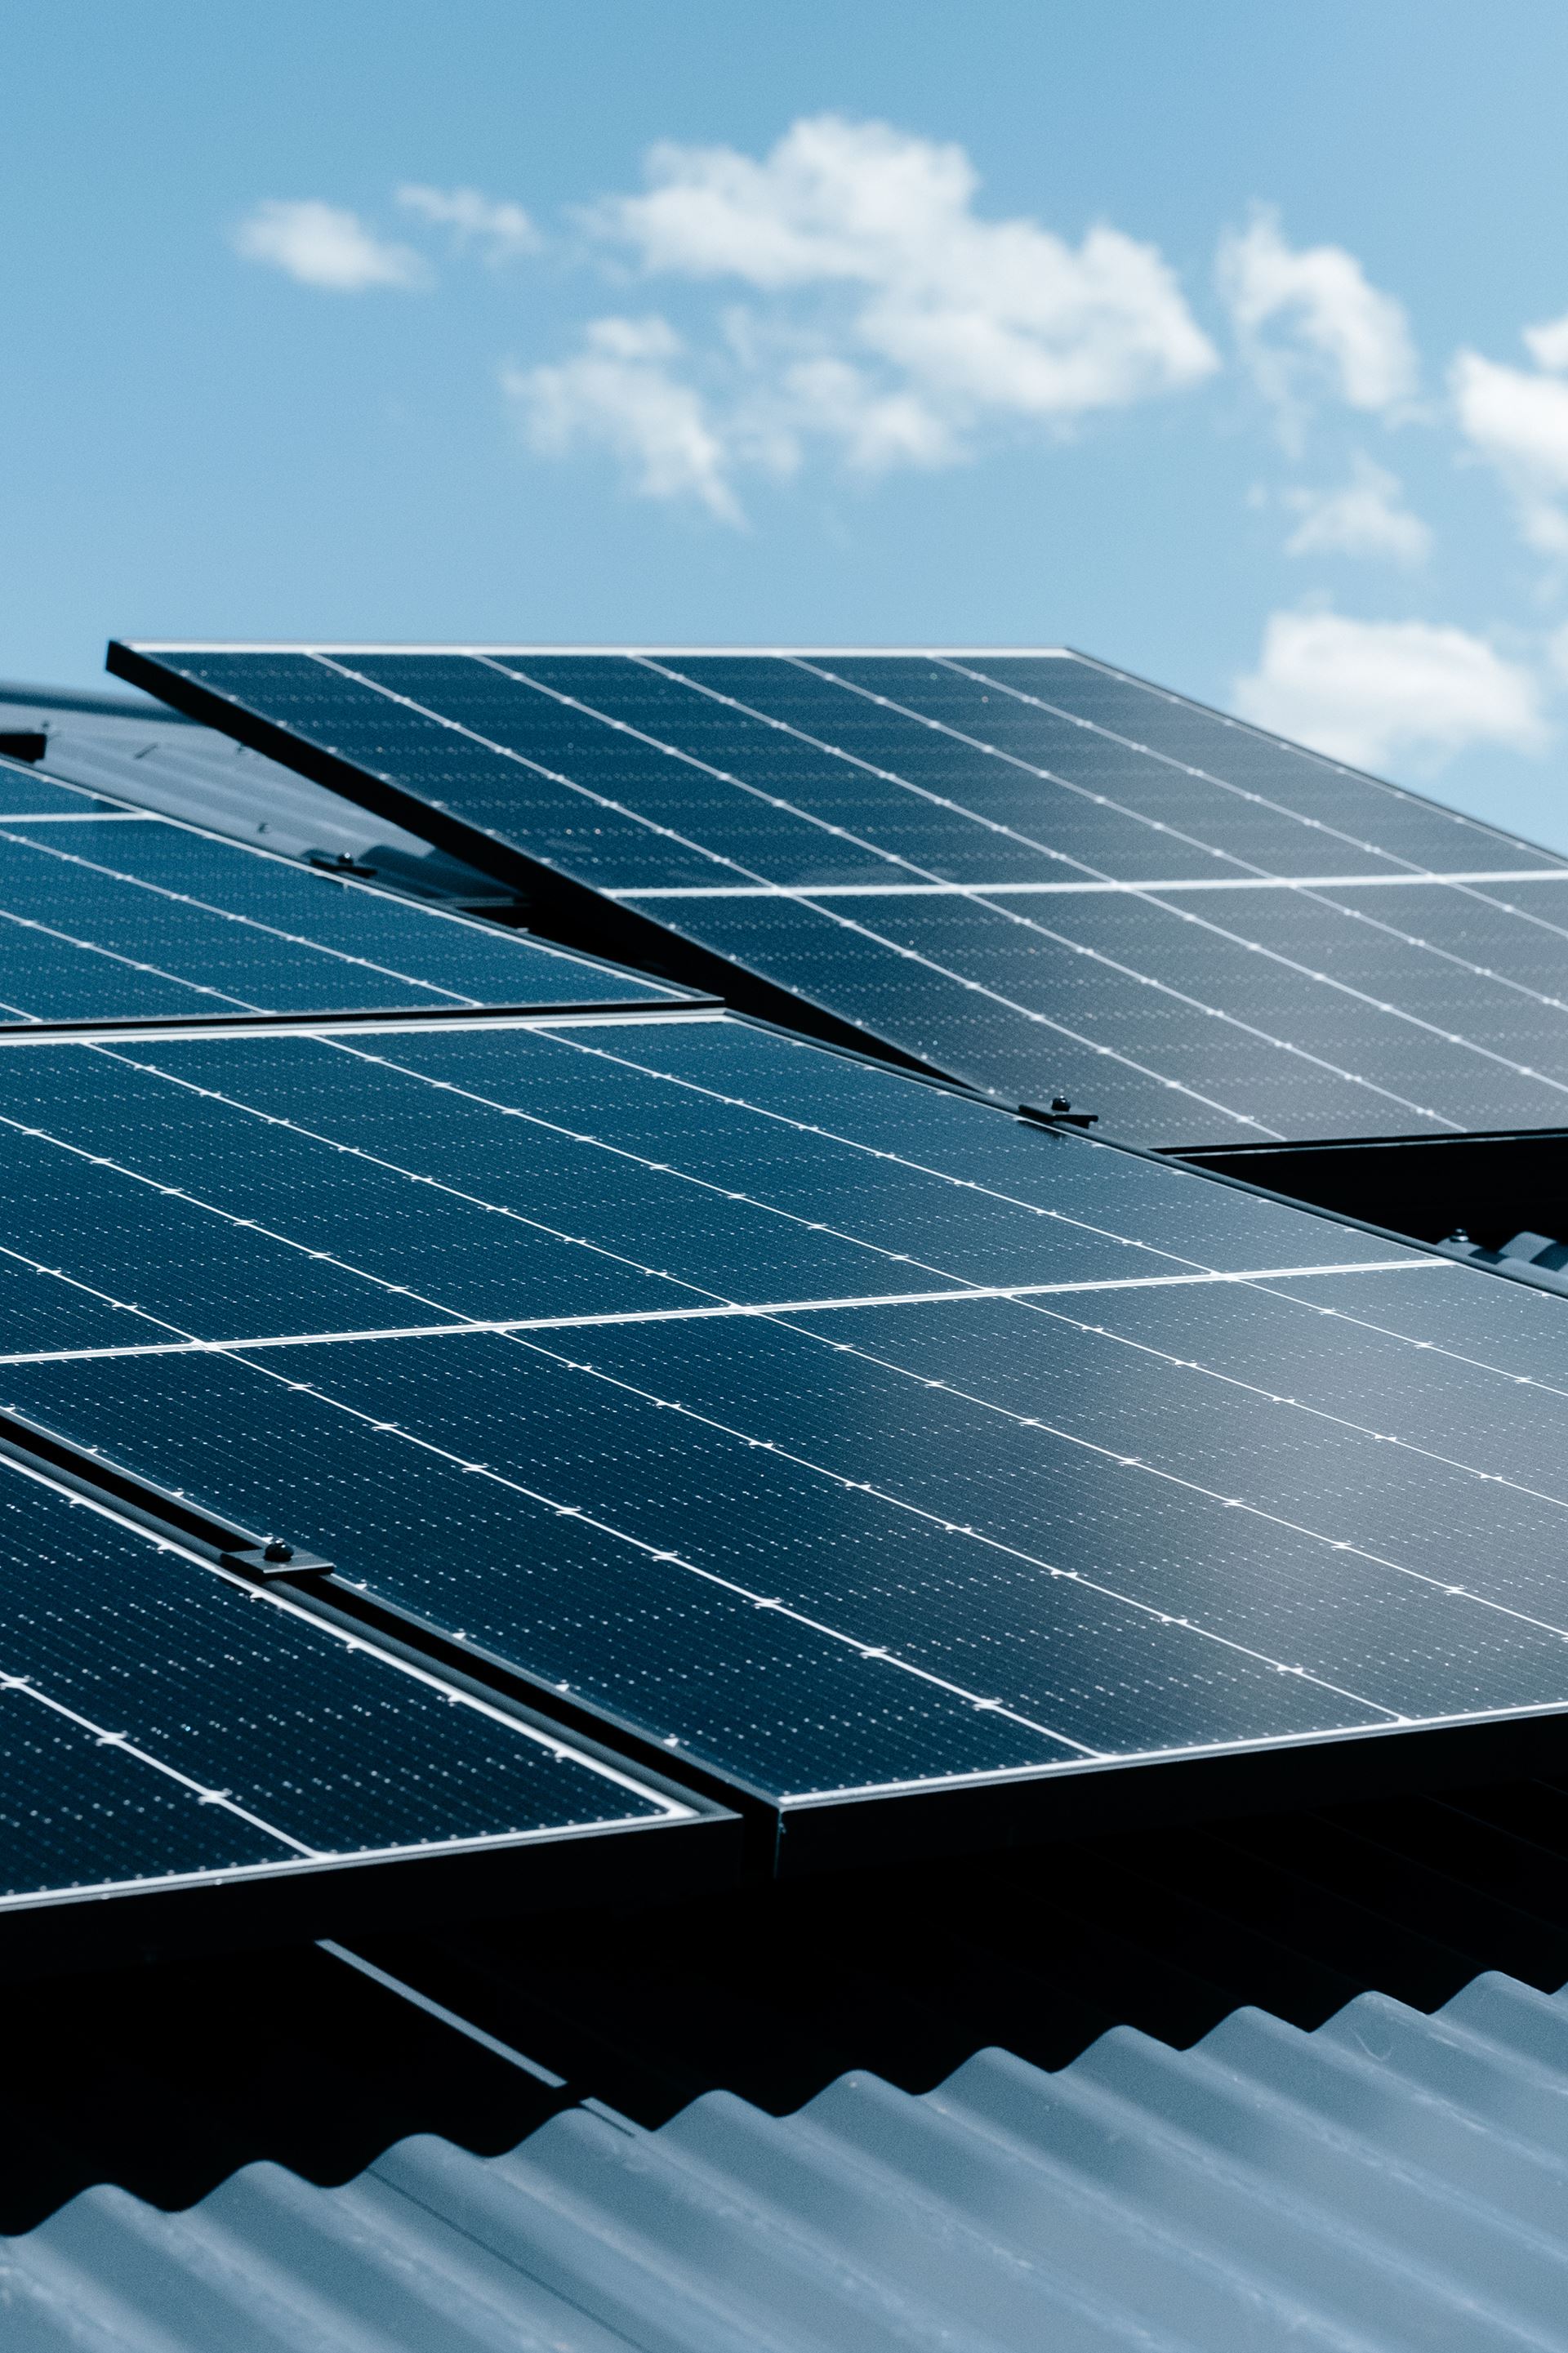 Rooftop solar tariffs trimmed as regulator urges more self consumption